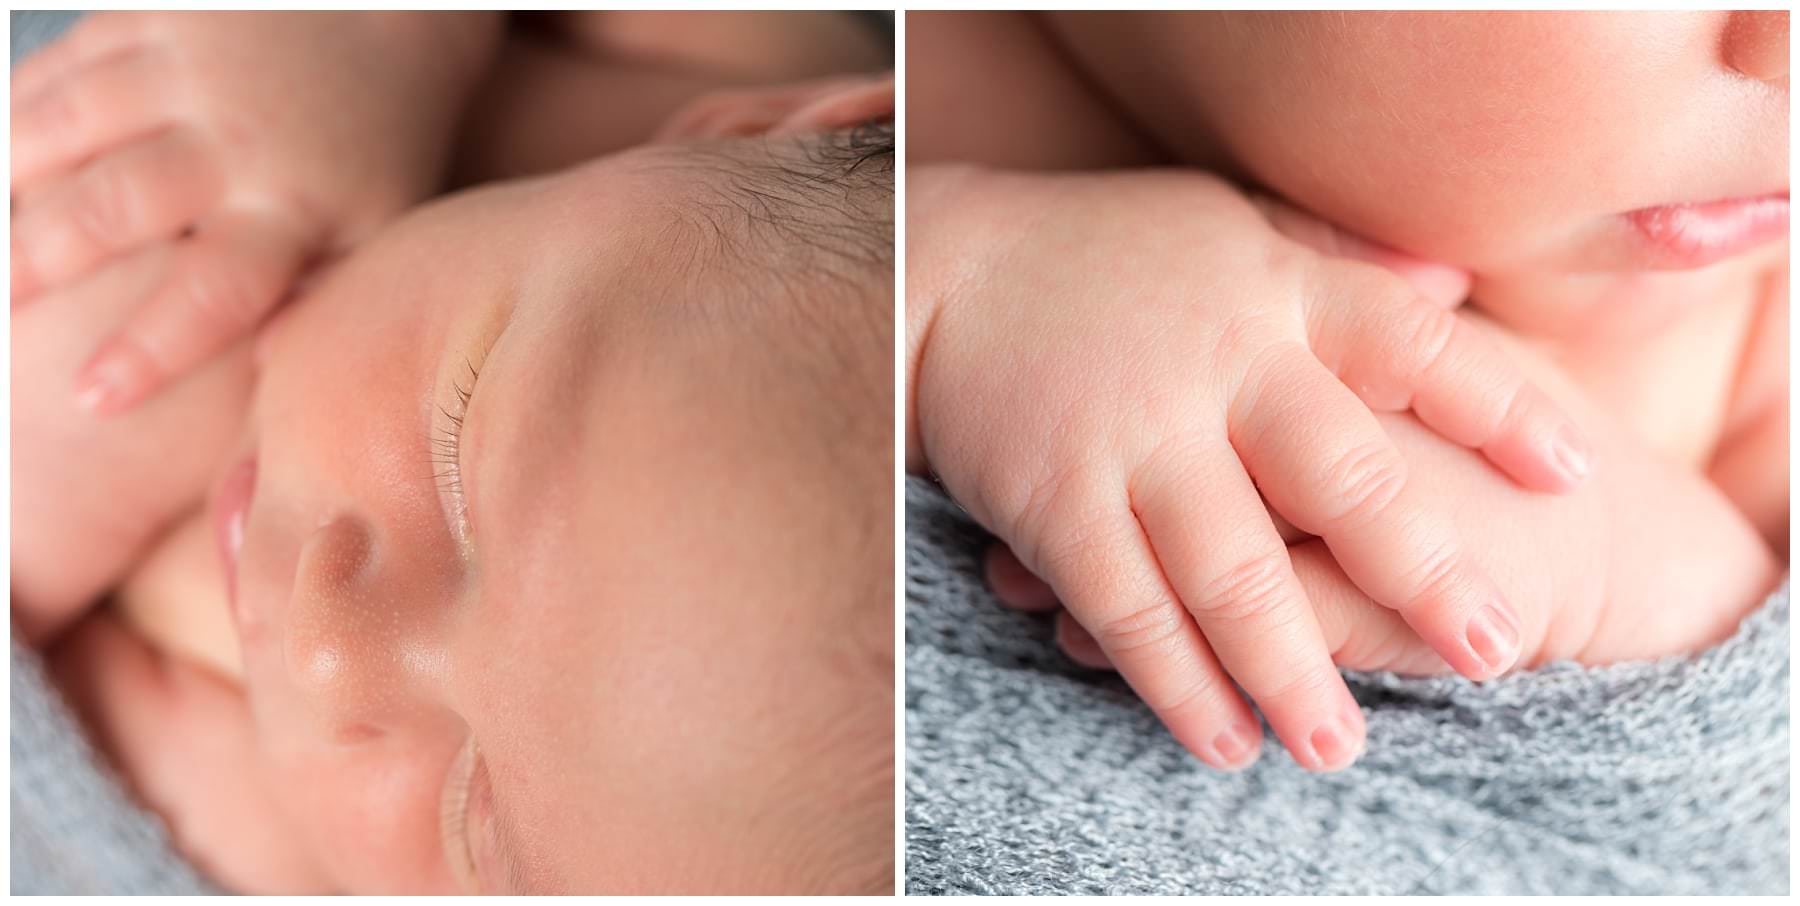 Newborn fingers and eyelashes close-up portrait details